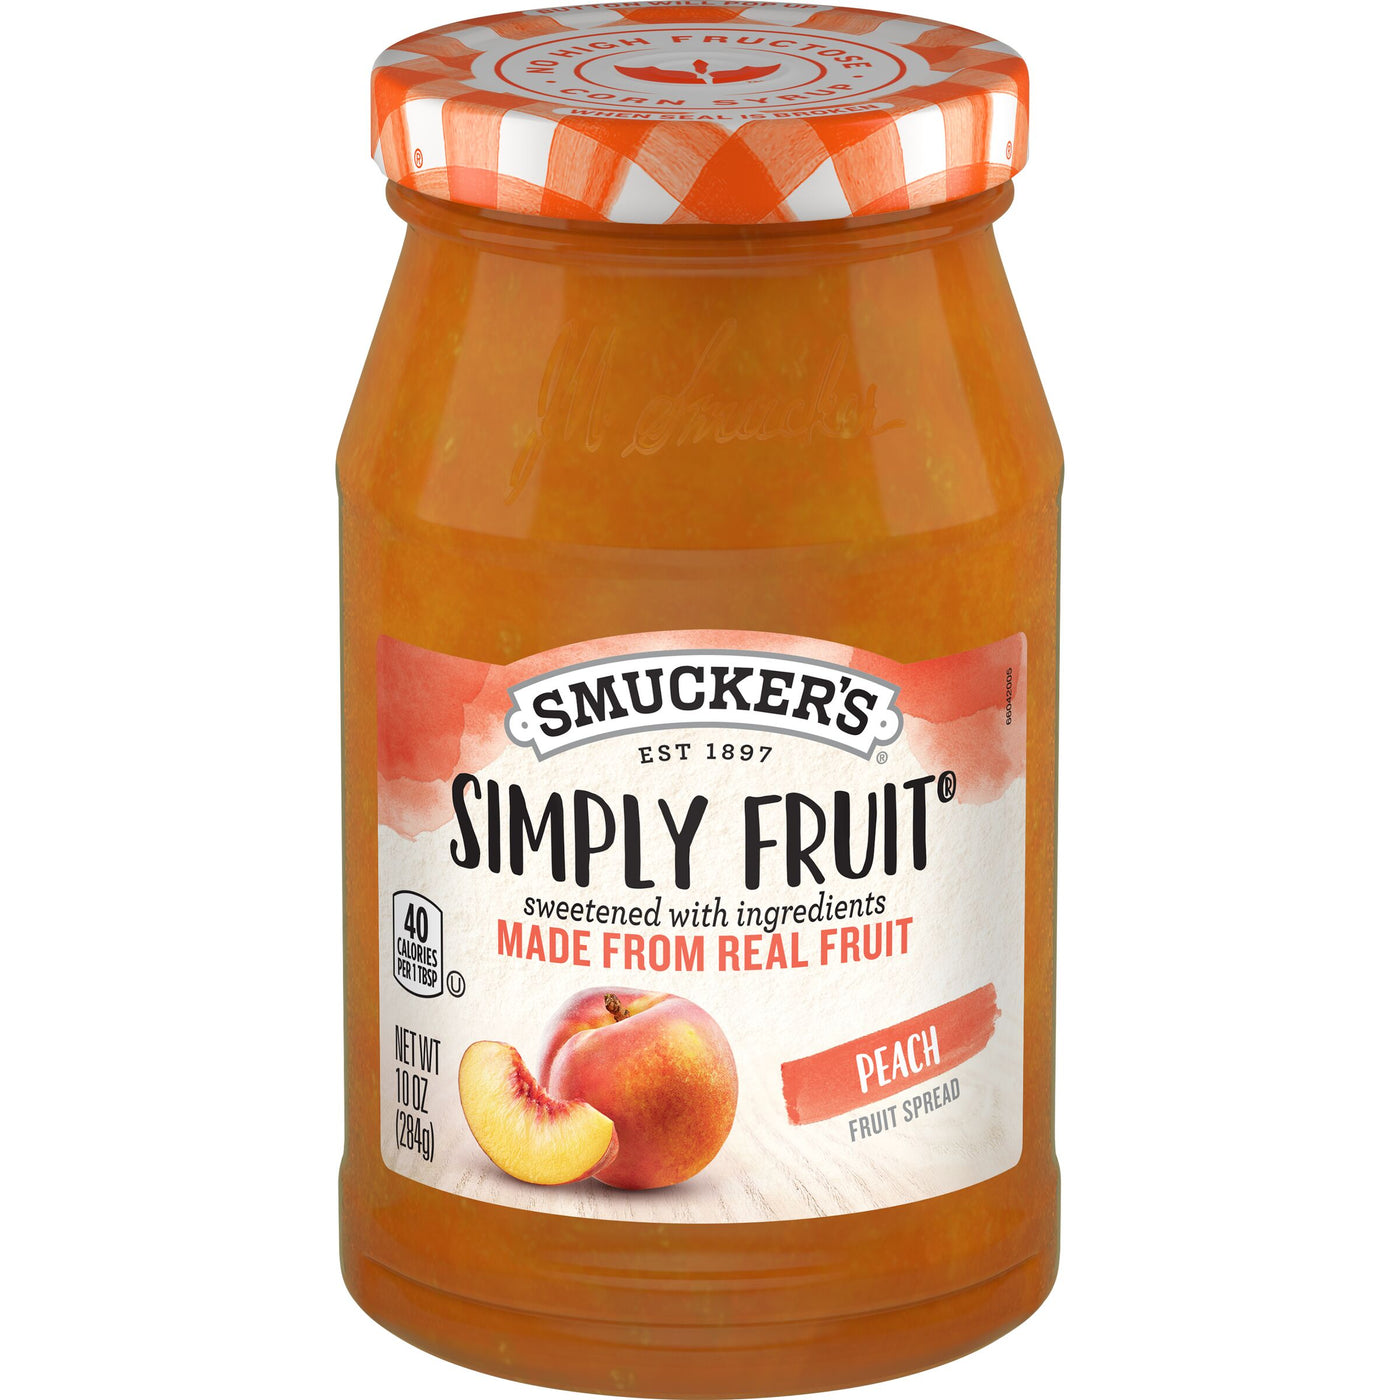 Smucker's Simply Fruit Peach Fruit Spread, 10 oz